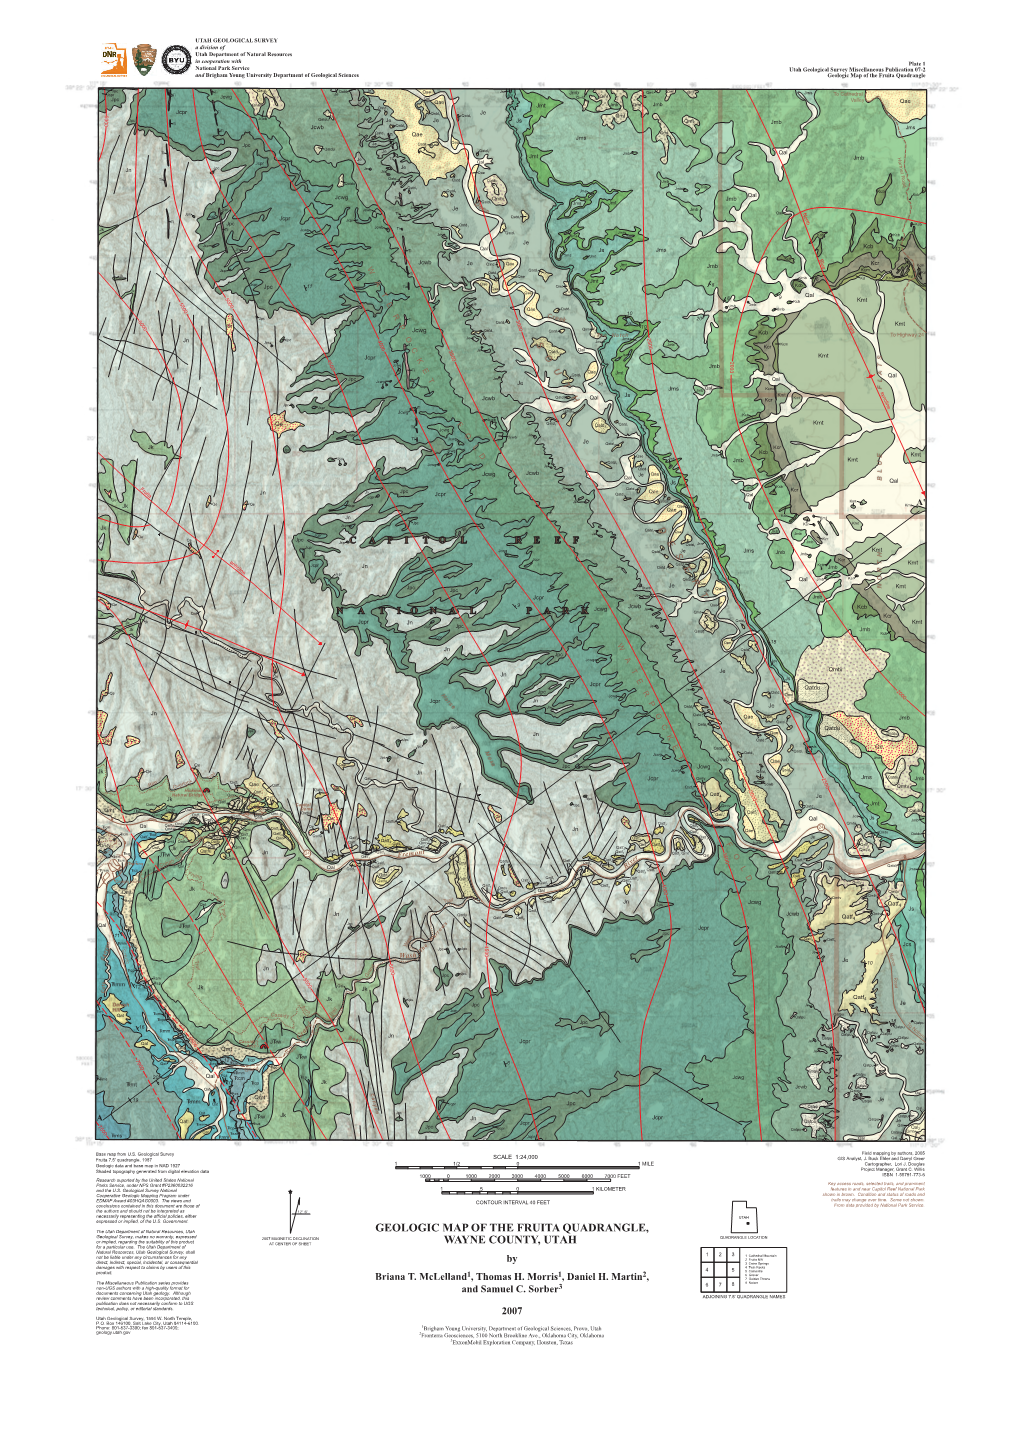 Geologic Map of the Fruita Quadrangle, Wayne County, Utah